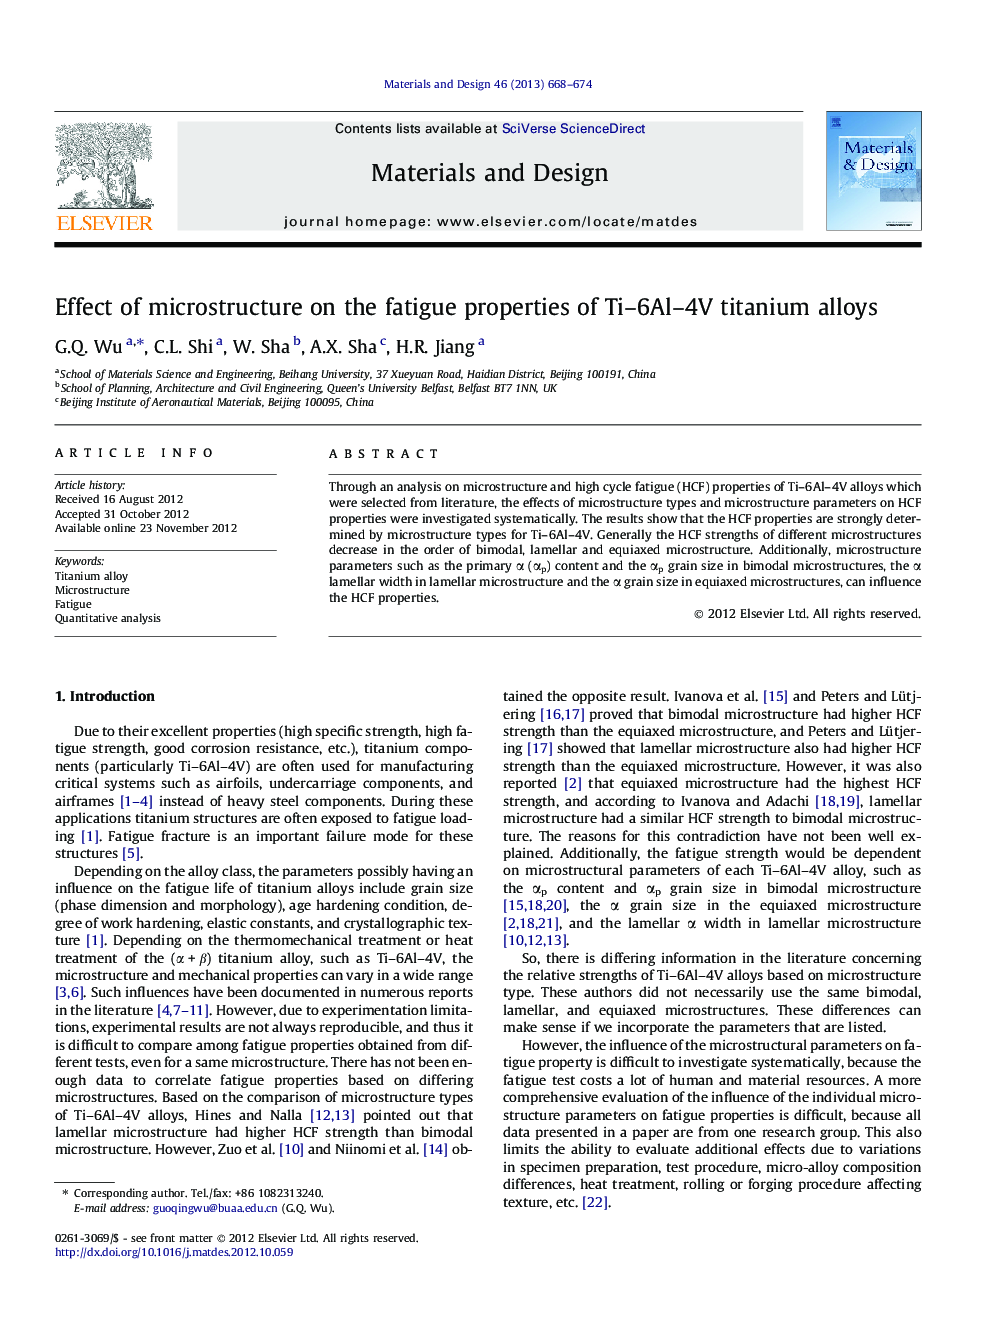 Effect of microstructure on the fatigue properties of Ti–6Al–4V titanium alloys